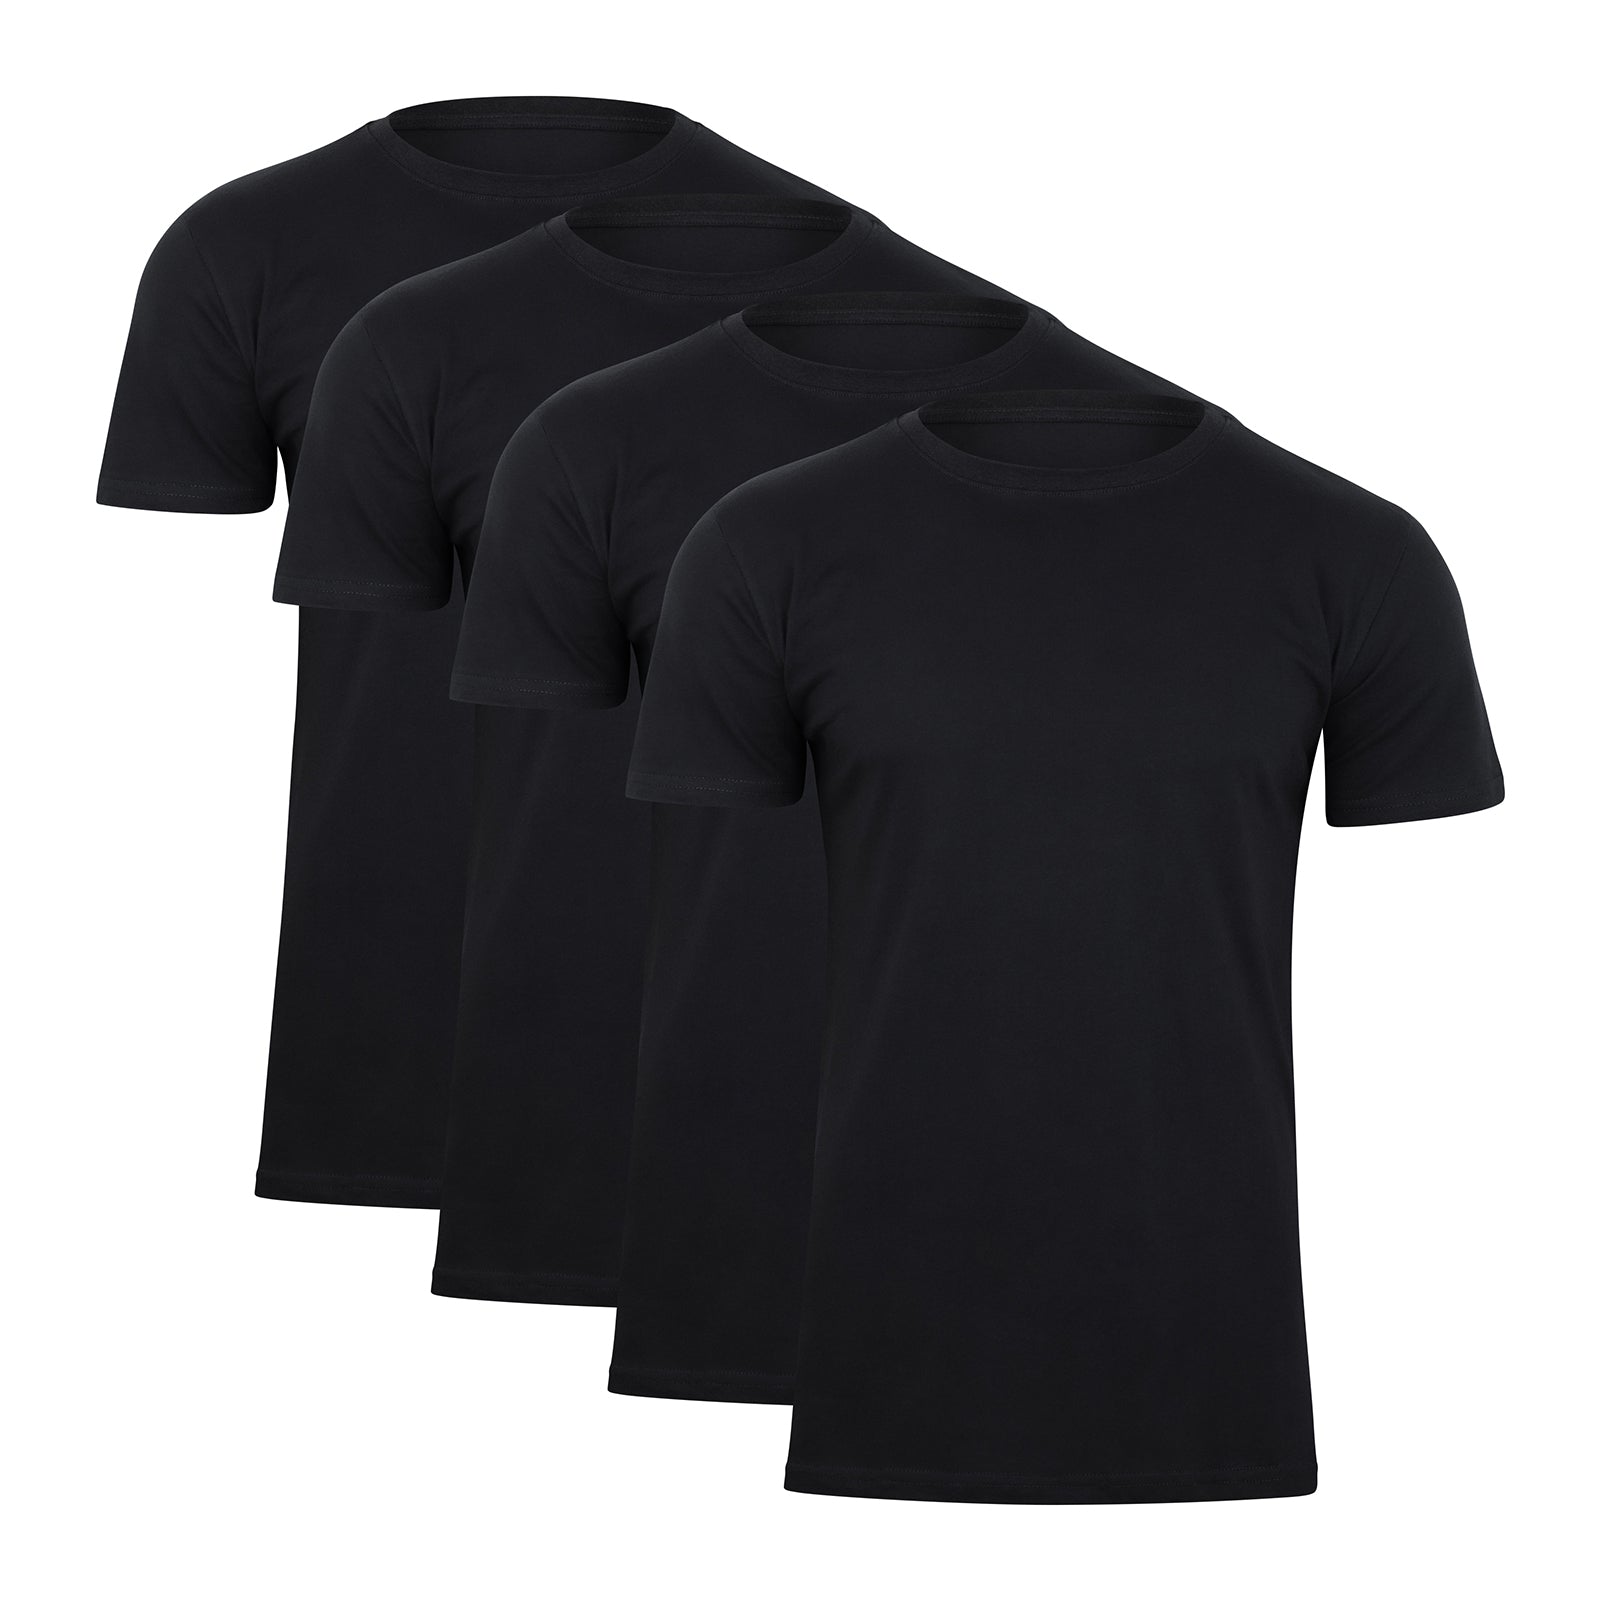 Paolo Renzo® Rundhals T-Shirt 2/4 oder 8 Stück - Größen M, L, XL, XXL, 3XL